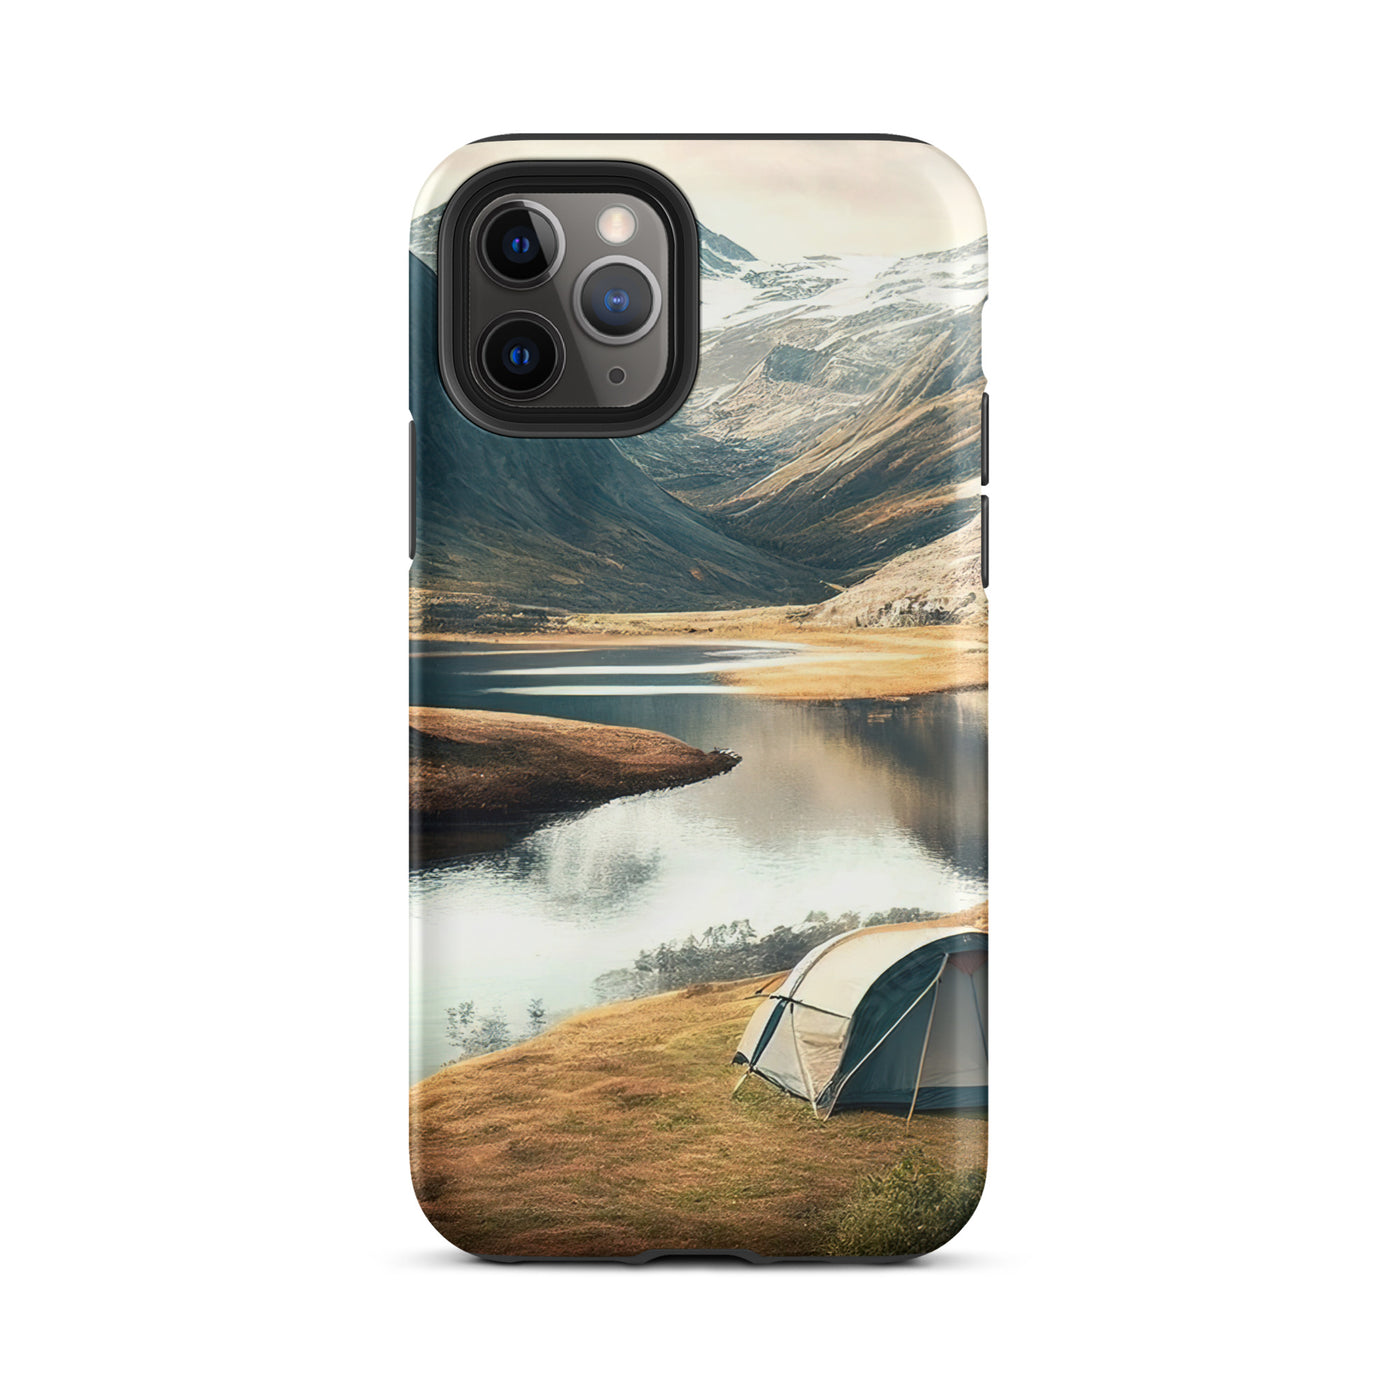 Zelt, Berge und Bergsee - iPhone Schutzhülle (robust) camping xxx iPhone 11 Pro